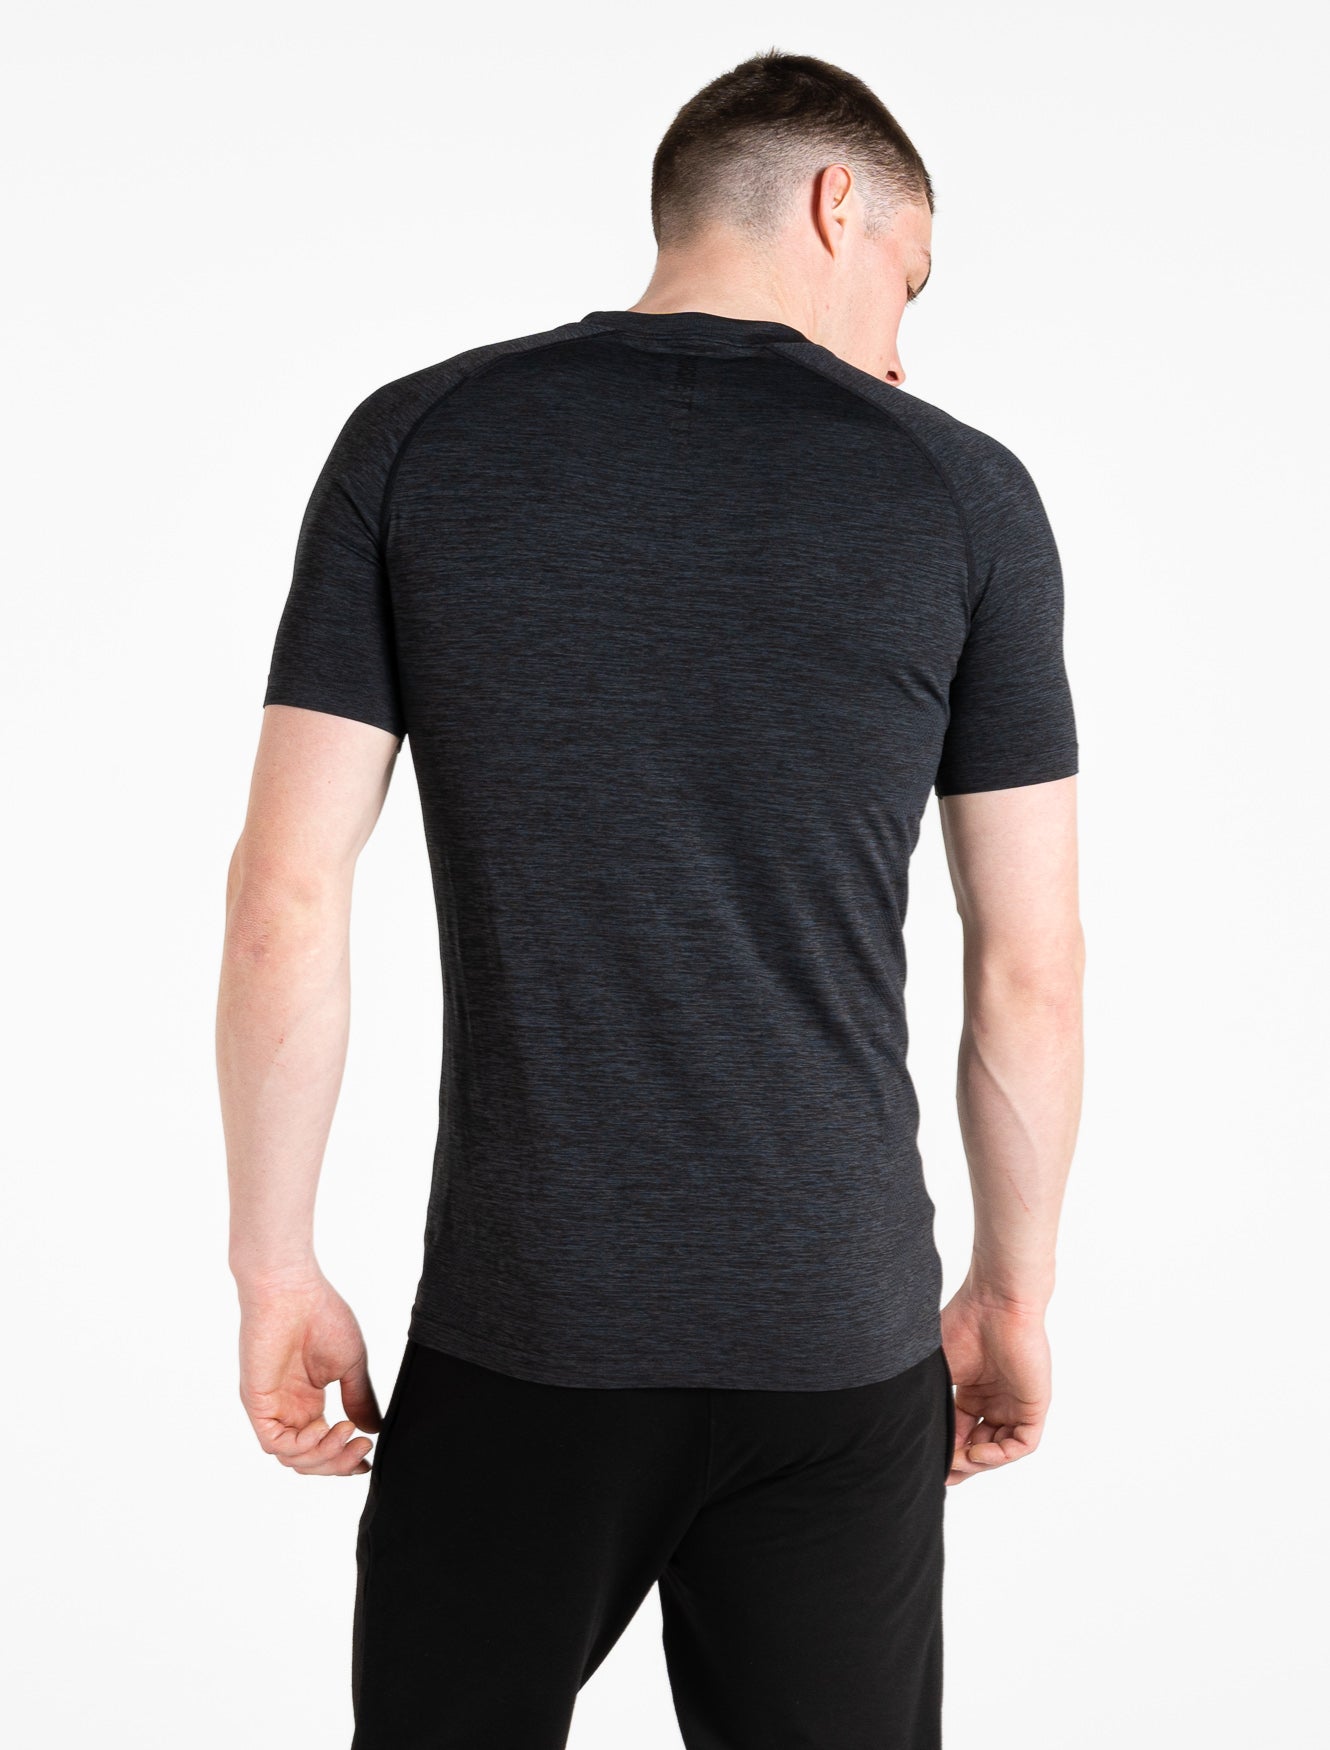 Intensity Seamless T-shirt / Black Marl Pursue Fitness 6